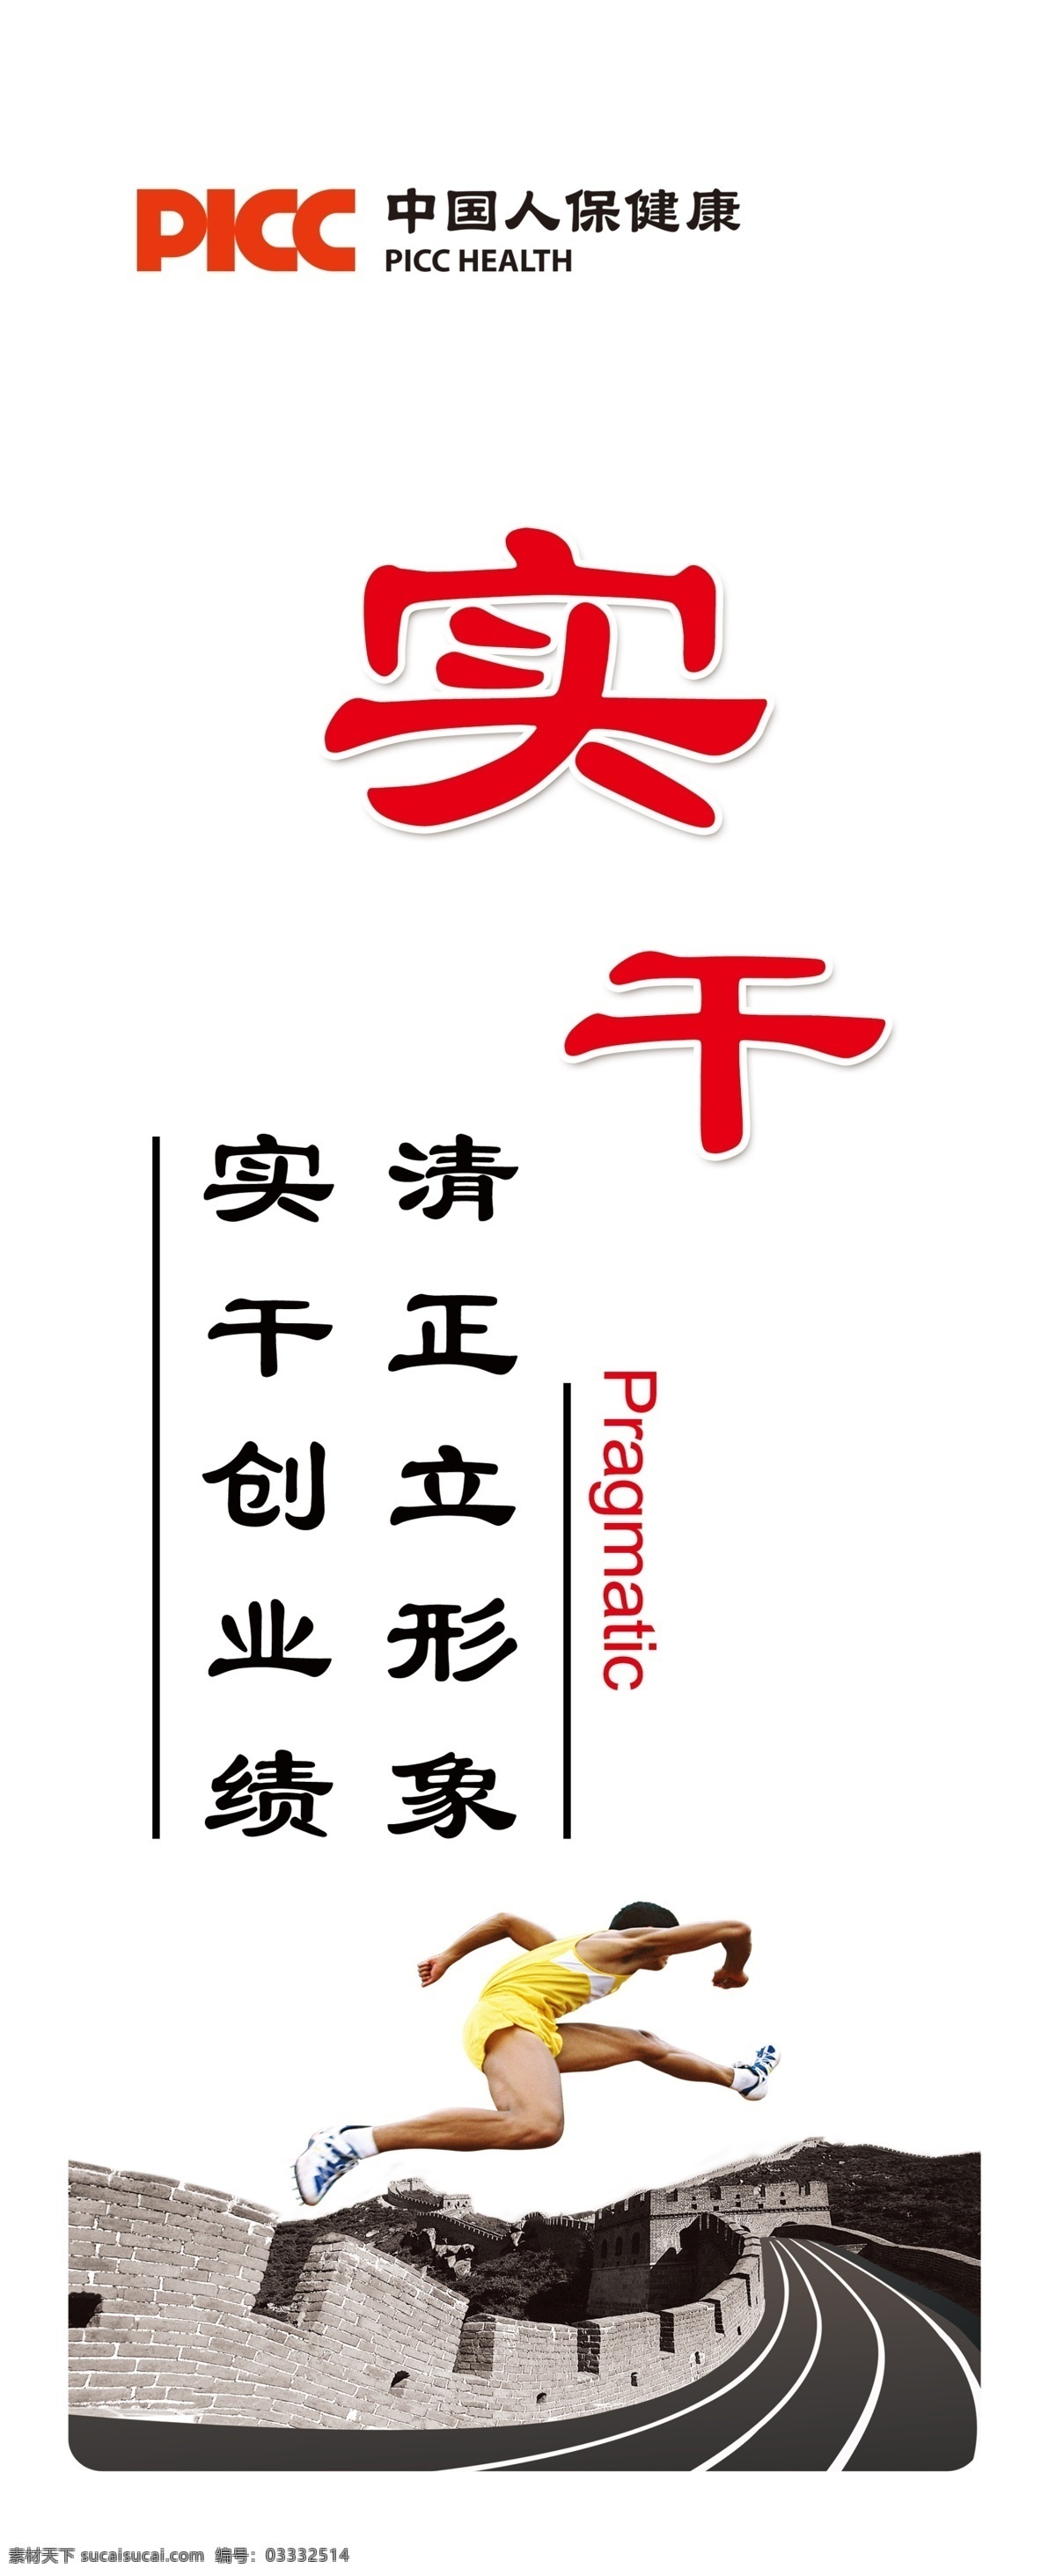 picc 中国人保 健康 保险 企业文化 上墙牌 实干 跑步 跨越 长城 简洁 大气 logo 分层